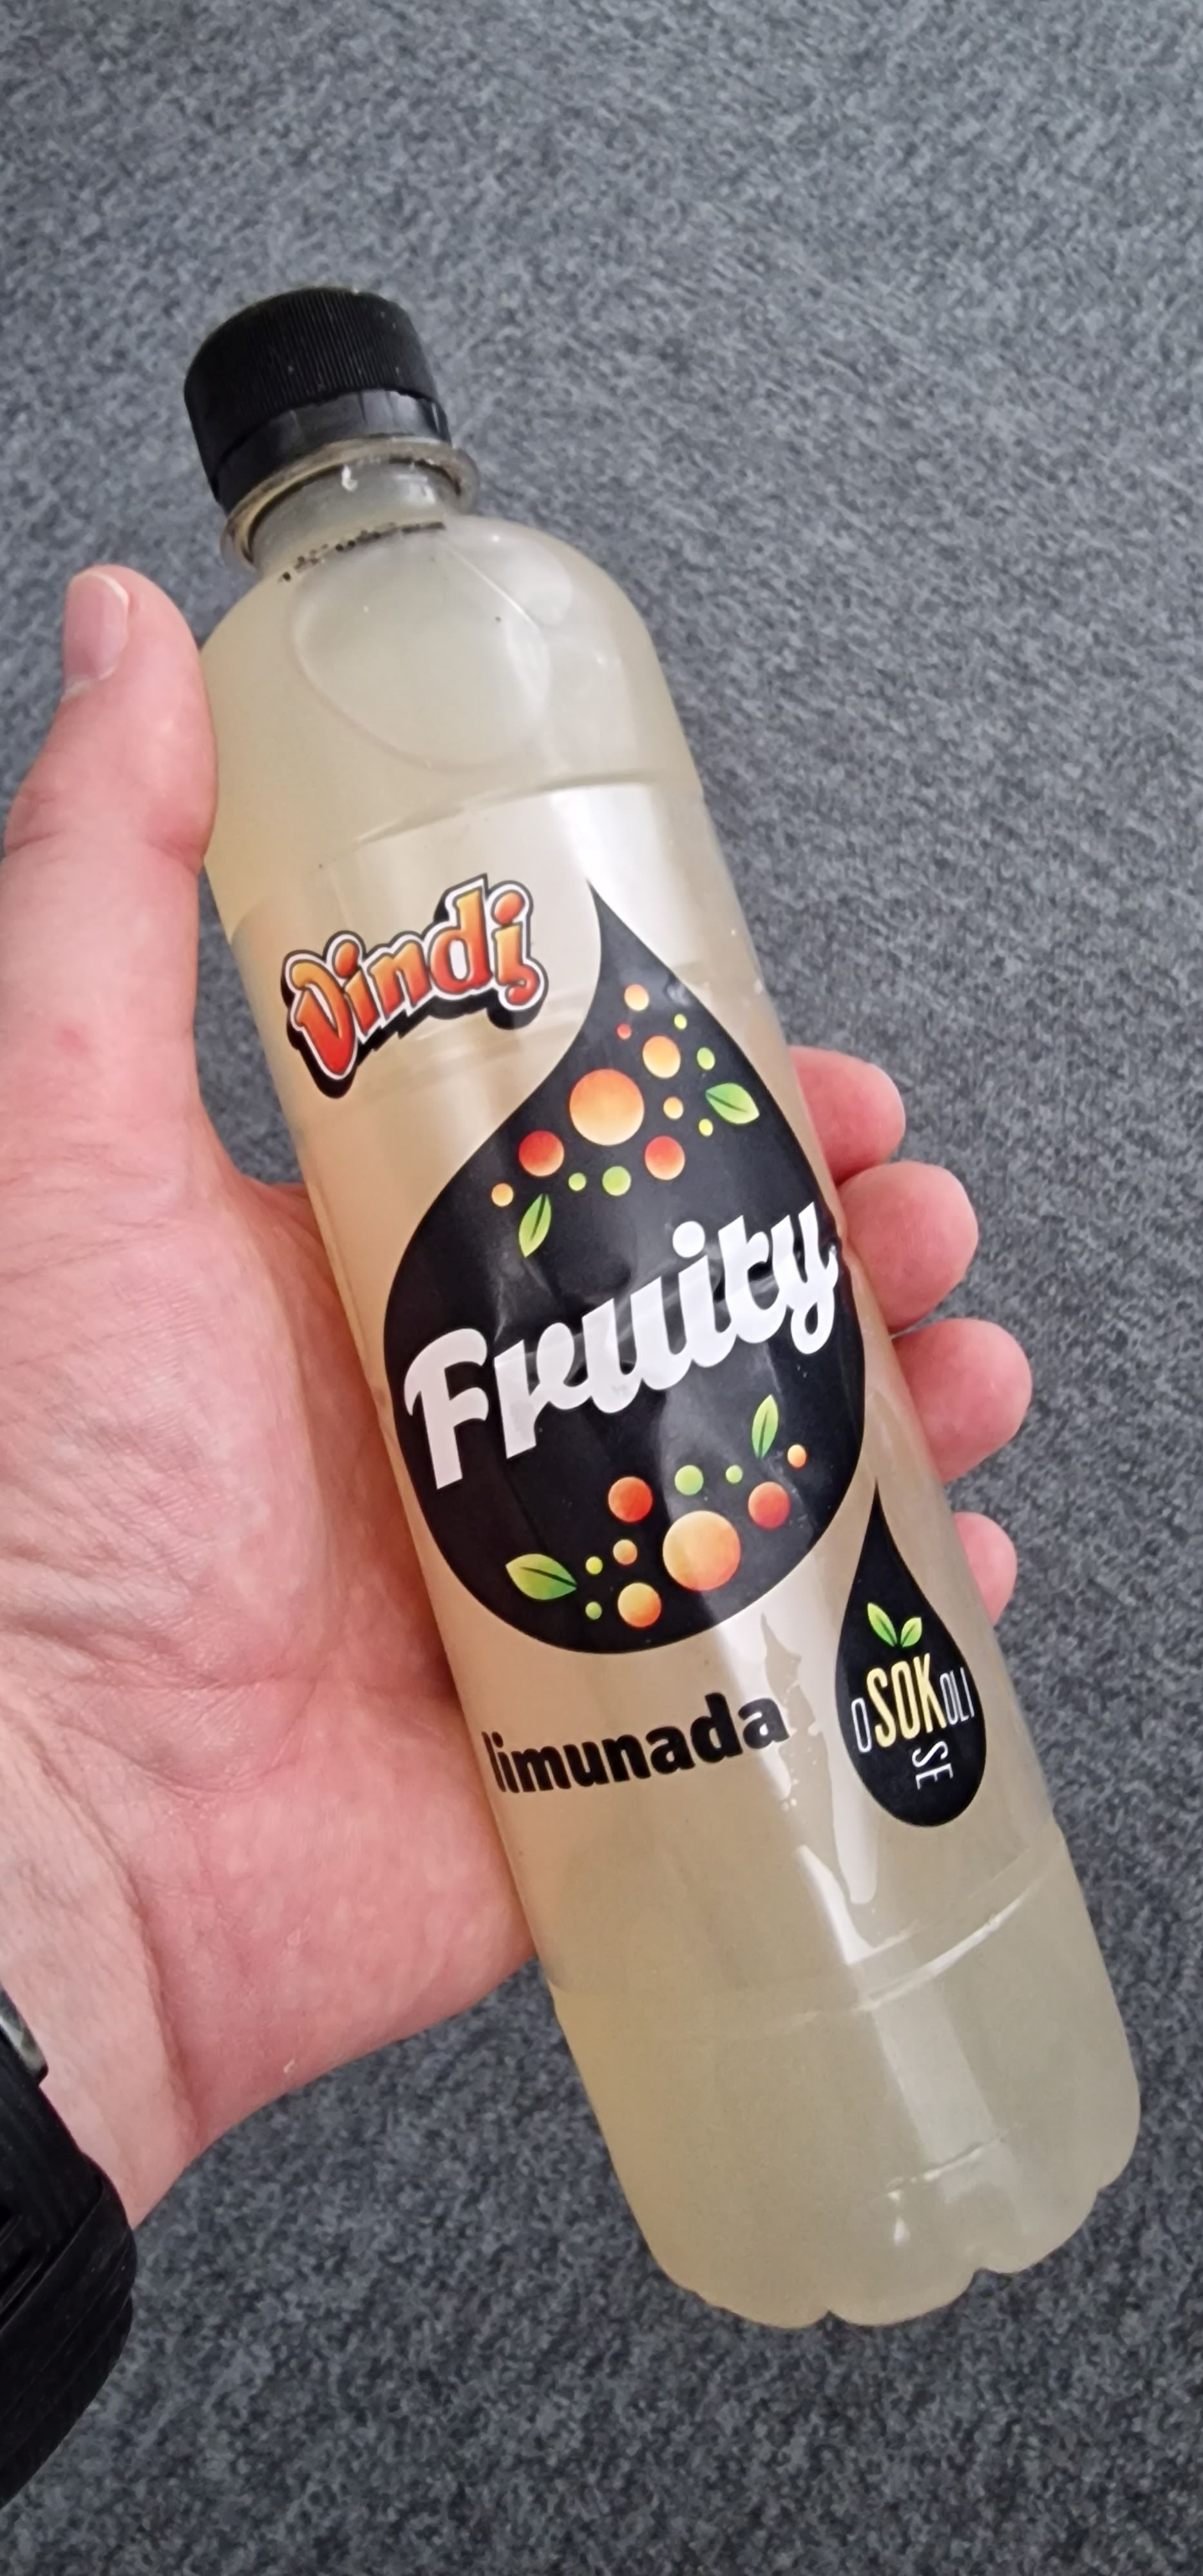 Vindi Fruity limunada